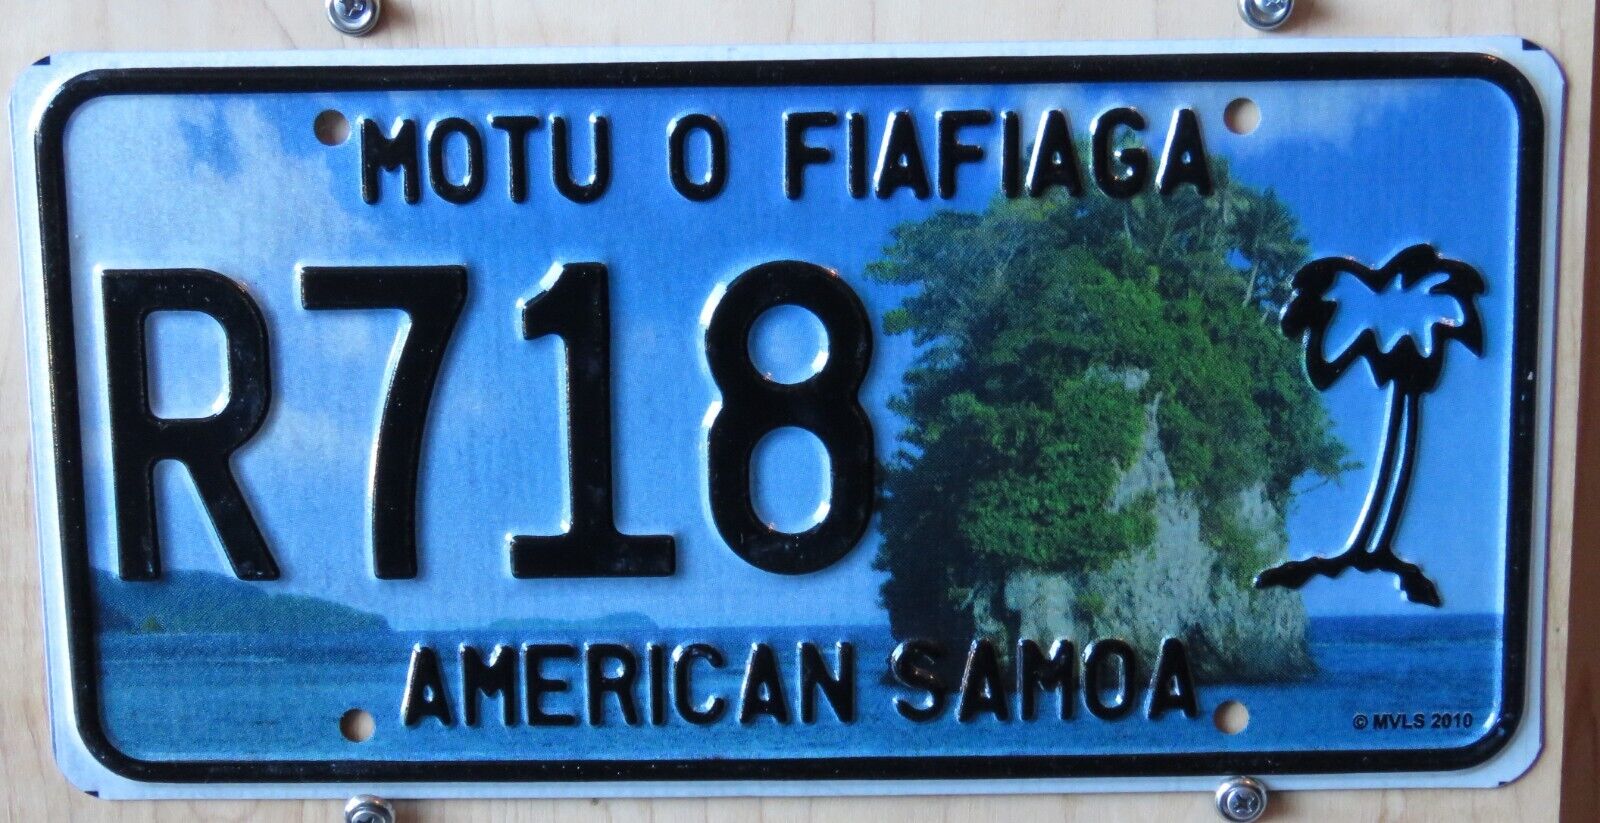 AMERICAN SAMOA  PAGO PAGO - PACIFIC ISLAND license plate  2012   Random numbers